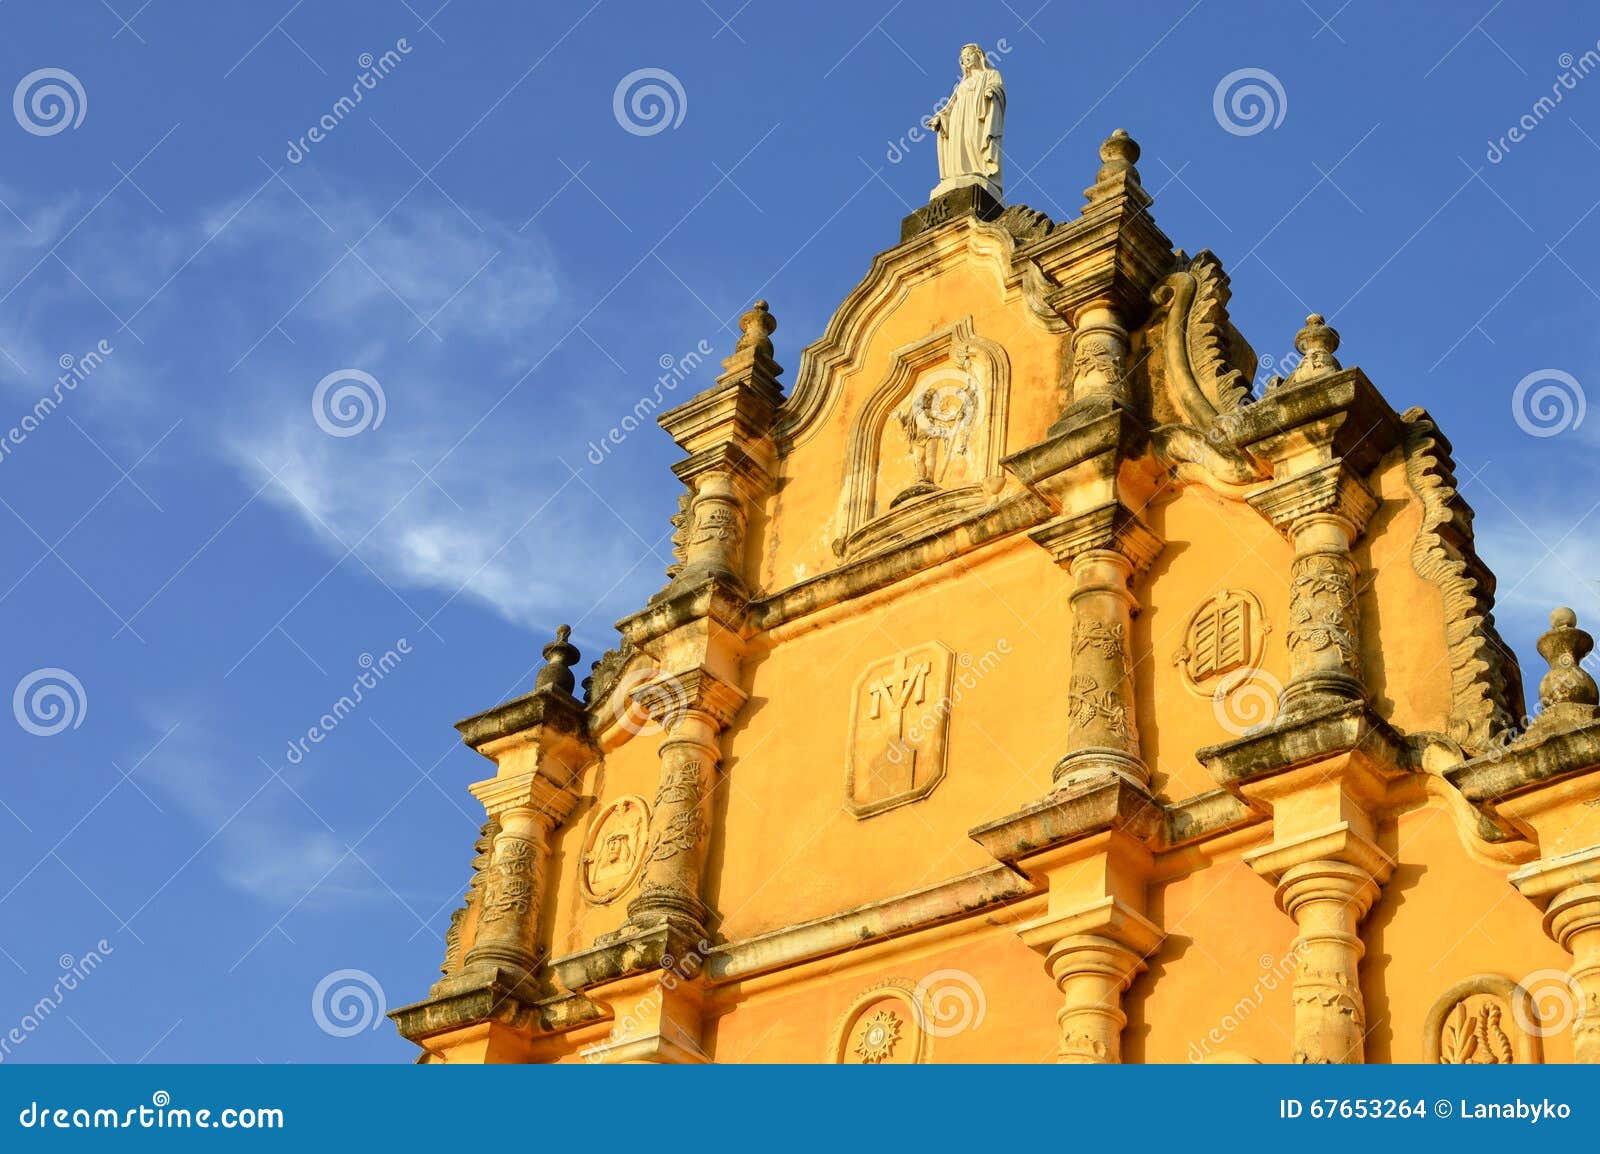 iglesia la recoleccion is one of the main cultural attractions